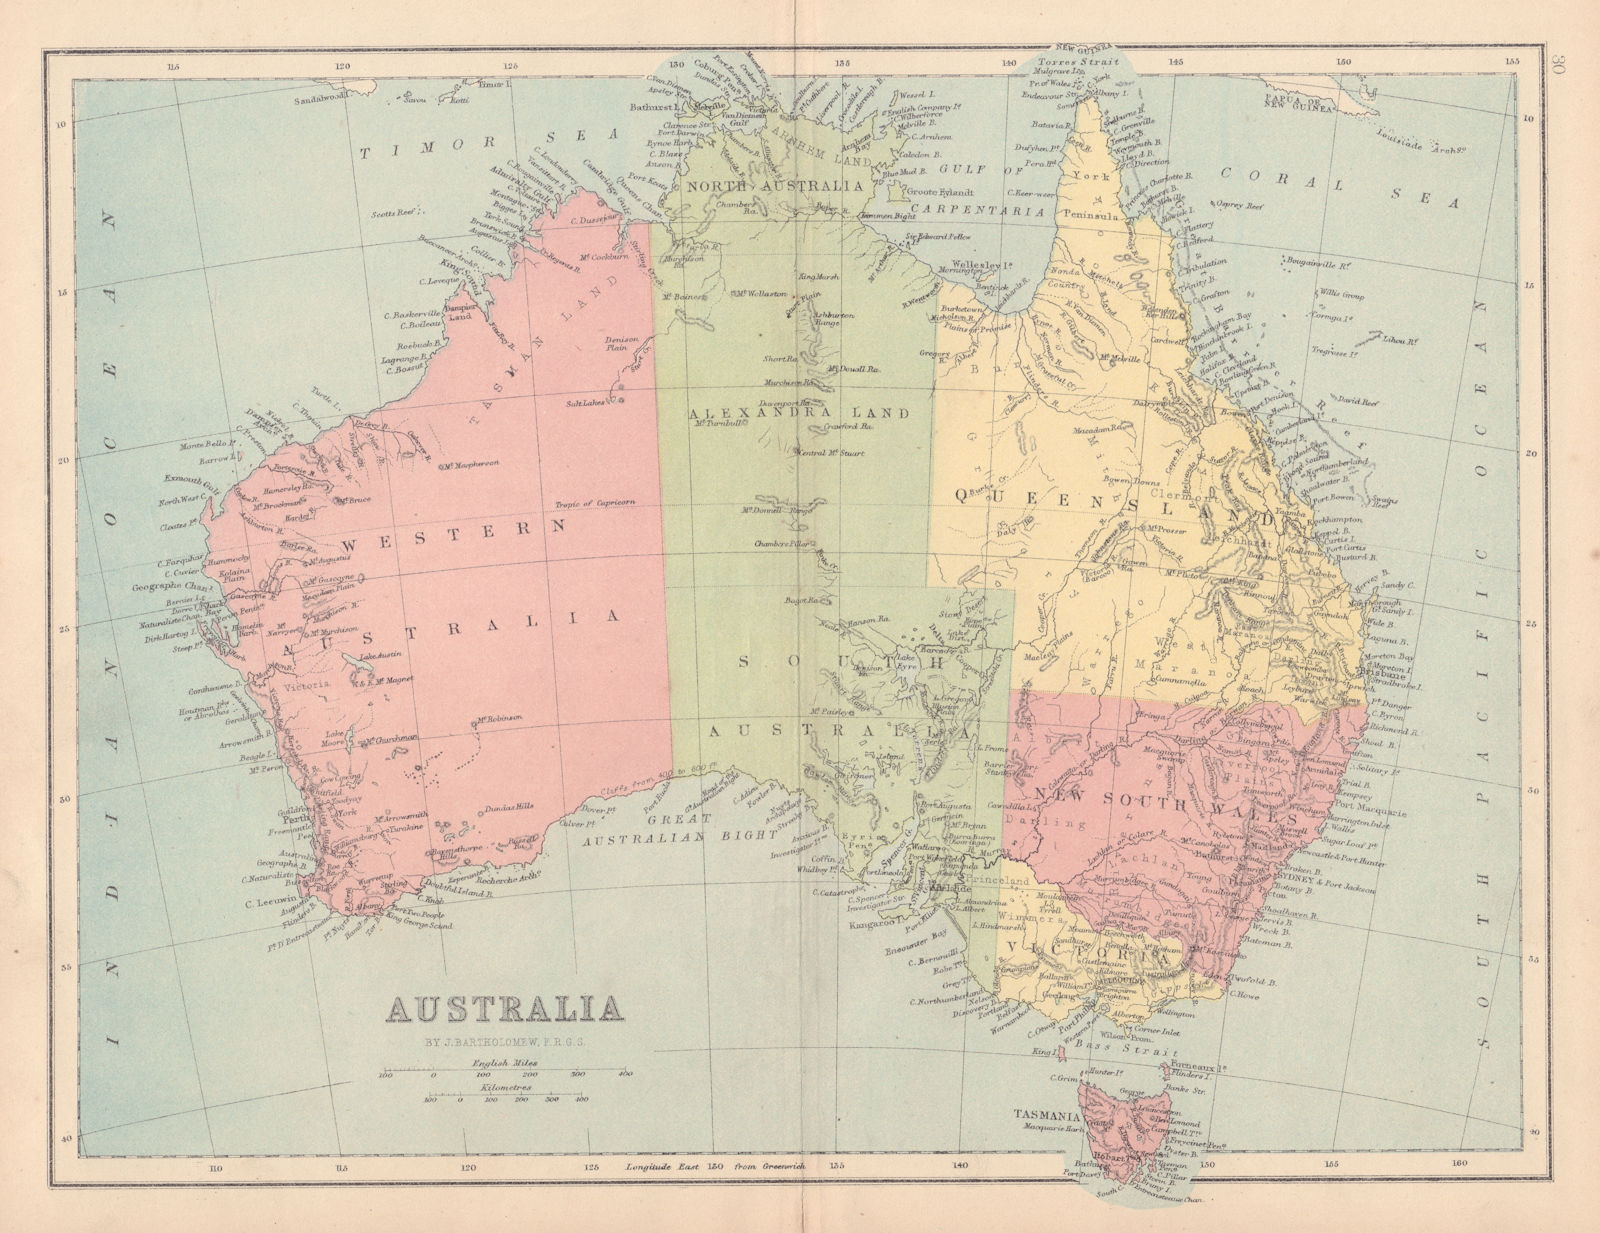 AUSTRALIA states. South Australia includes Alexandra Land / NT. COLLINS 1873 map